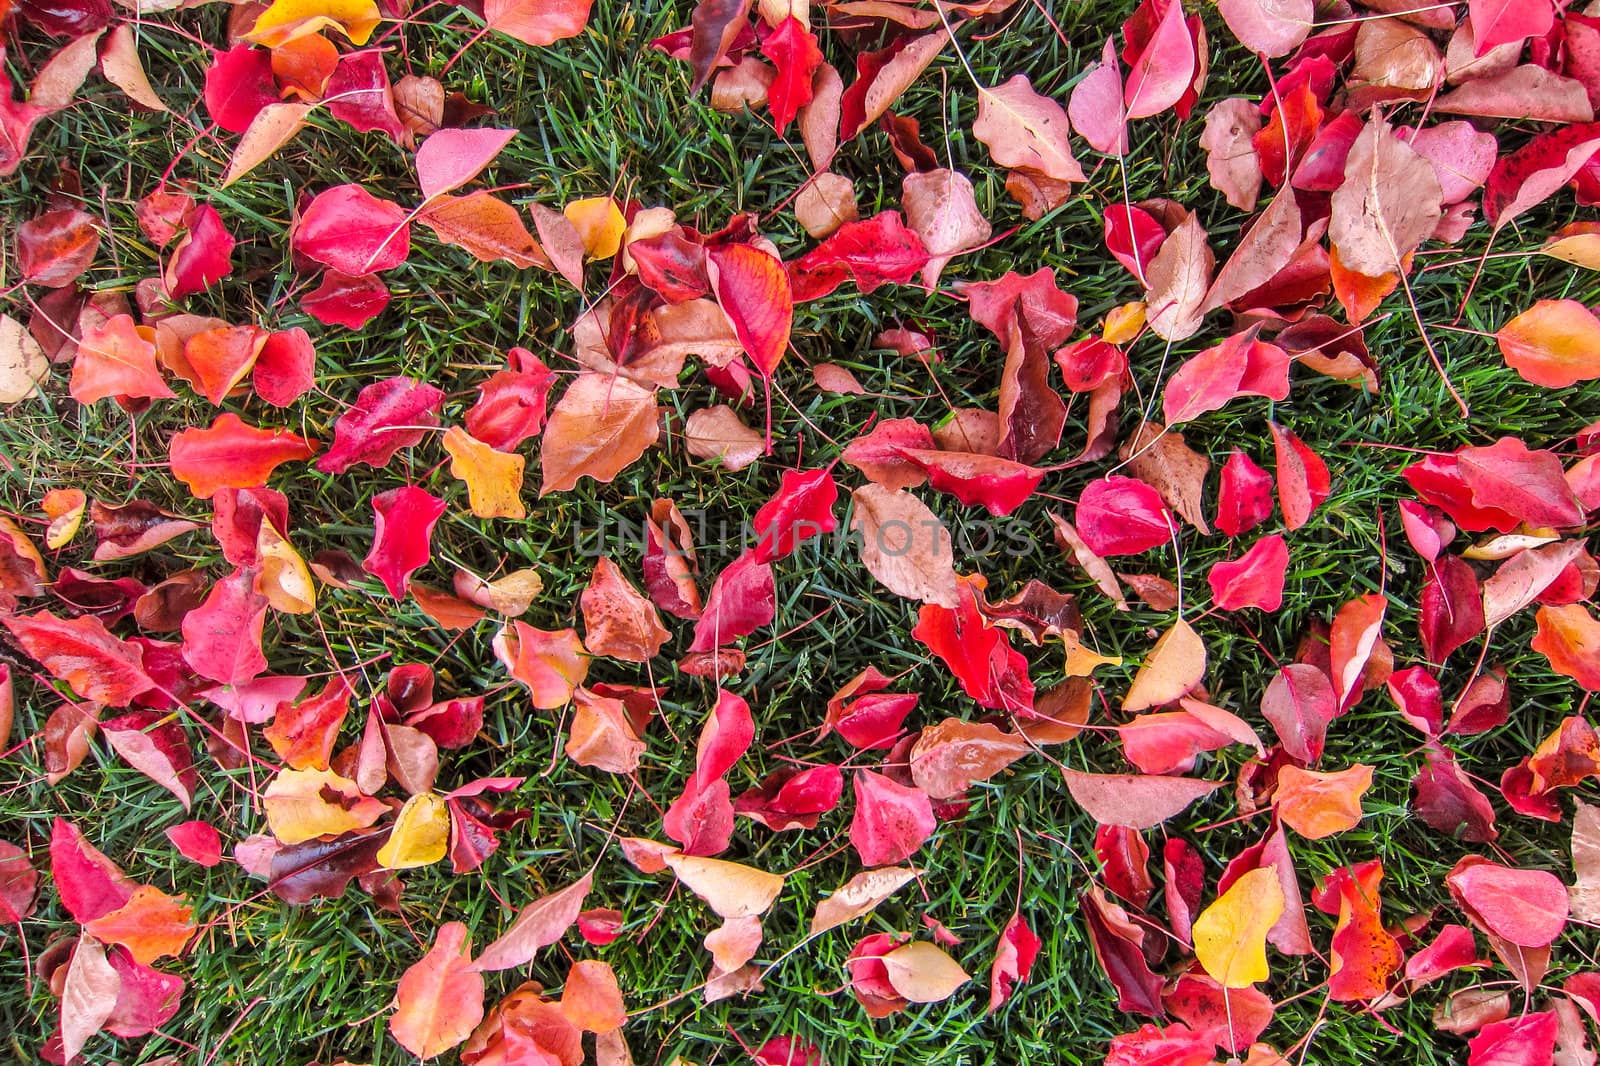 Autumn Leaves on Grass by britebluespot